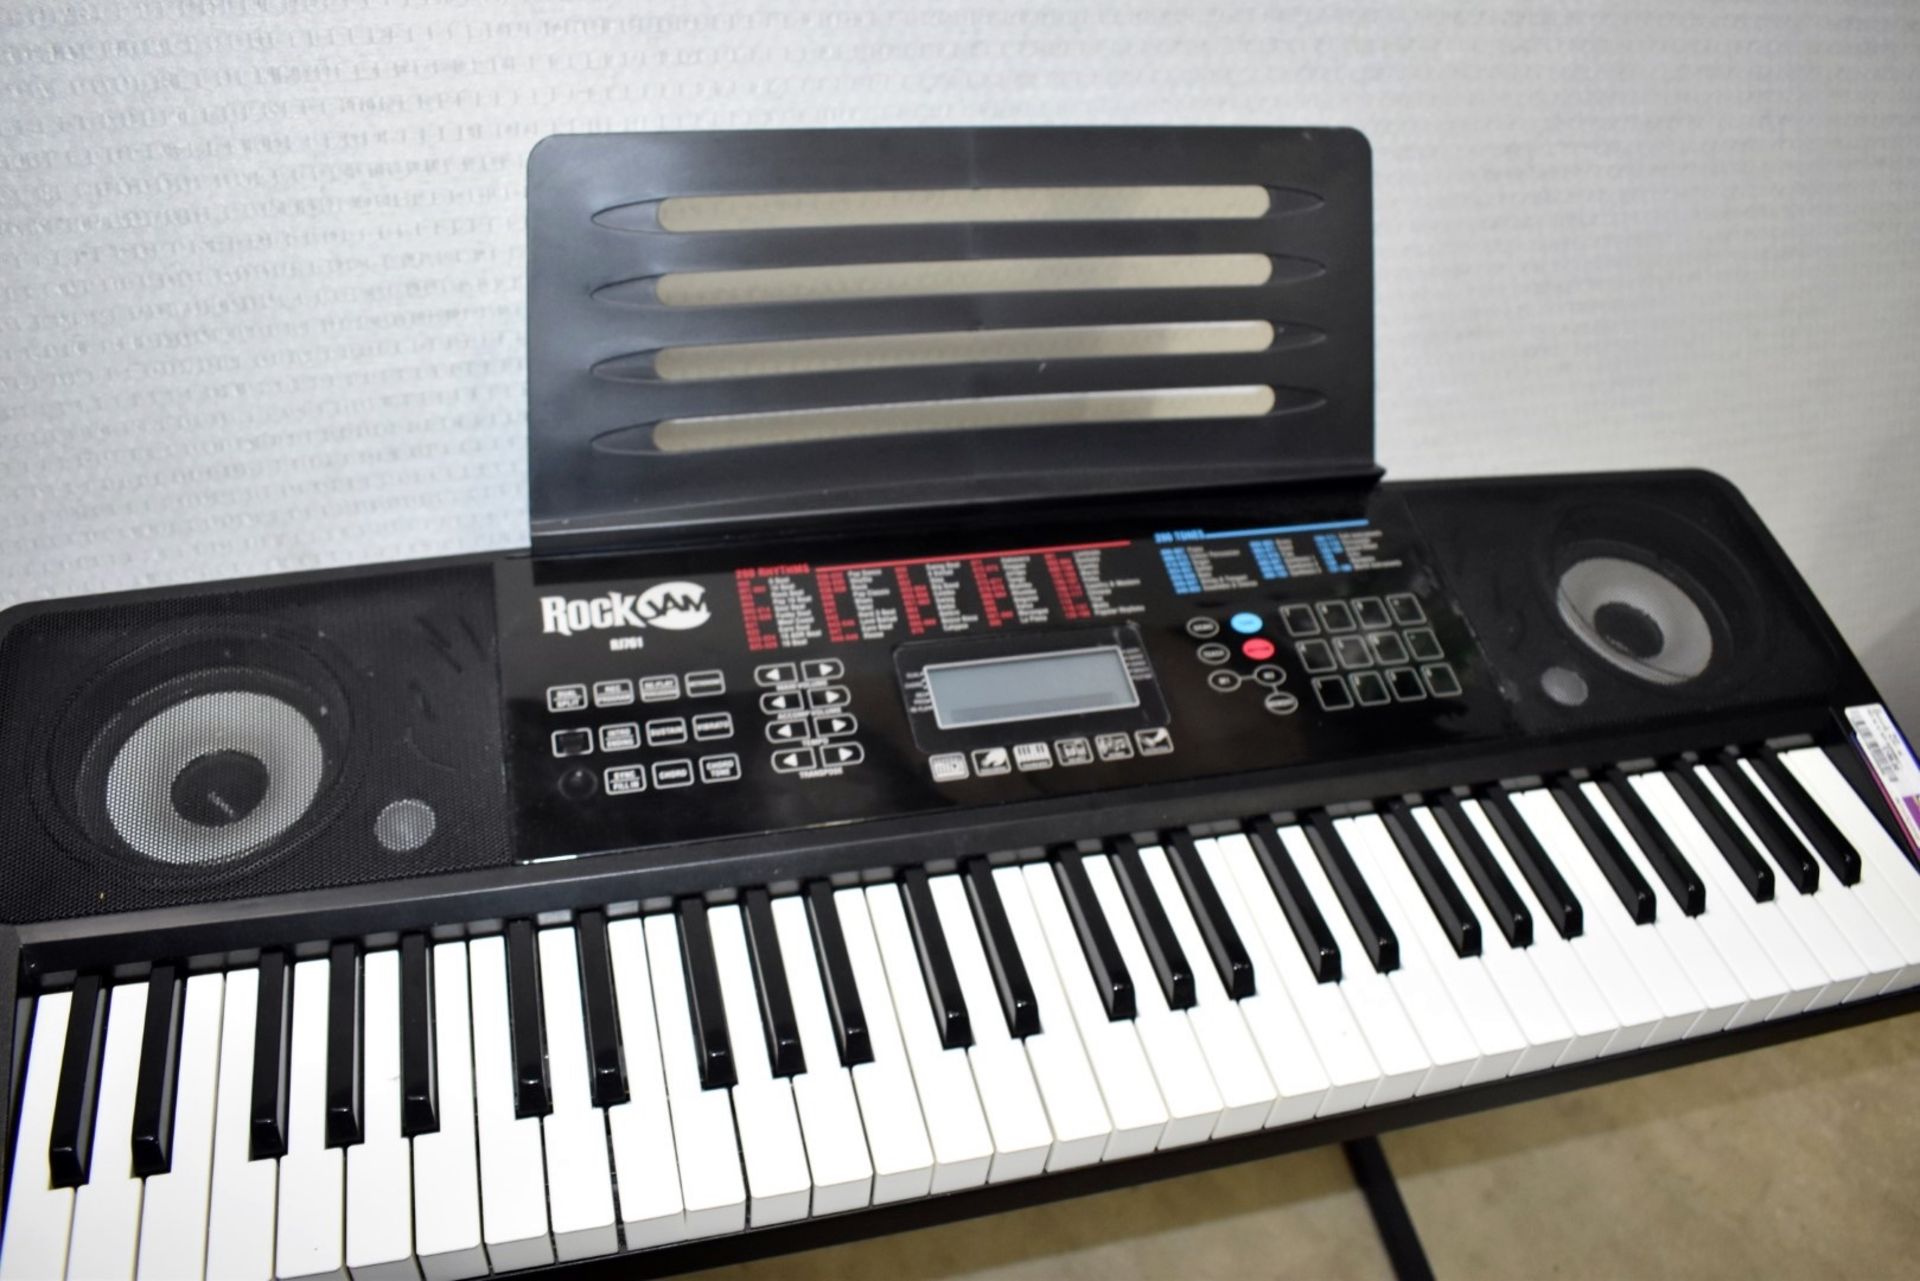 1 x ROCK JAM 61-Key Keyboard with Stand - Original Price £169.00 - Ex-display - Image 5 of 6